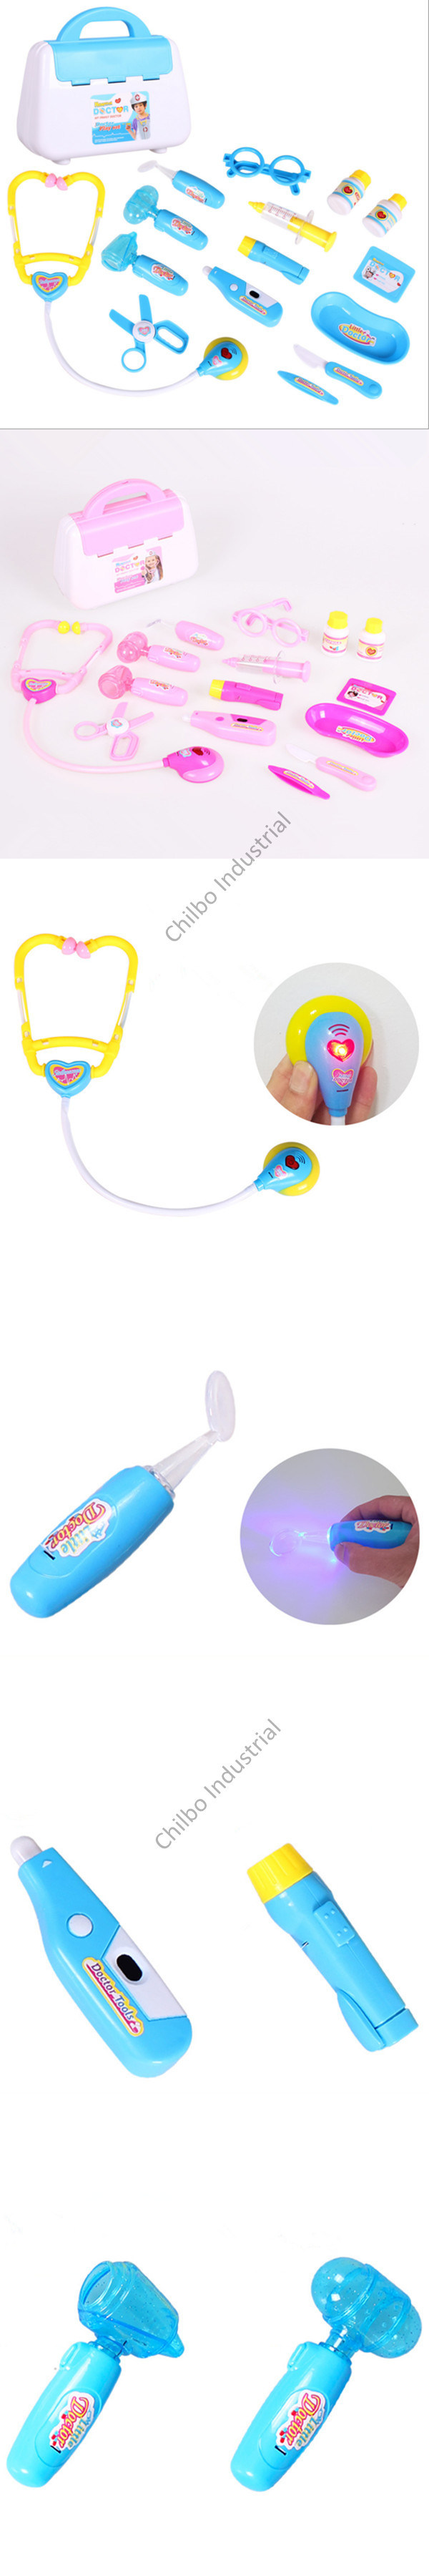 Preschool Plastic Medical Kits Toy Kids Doctor Set